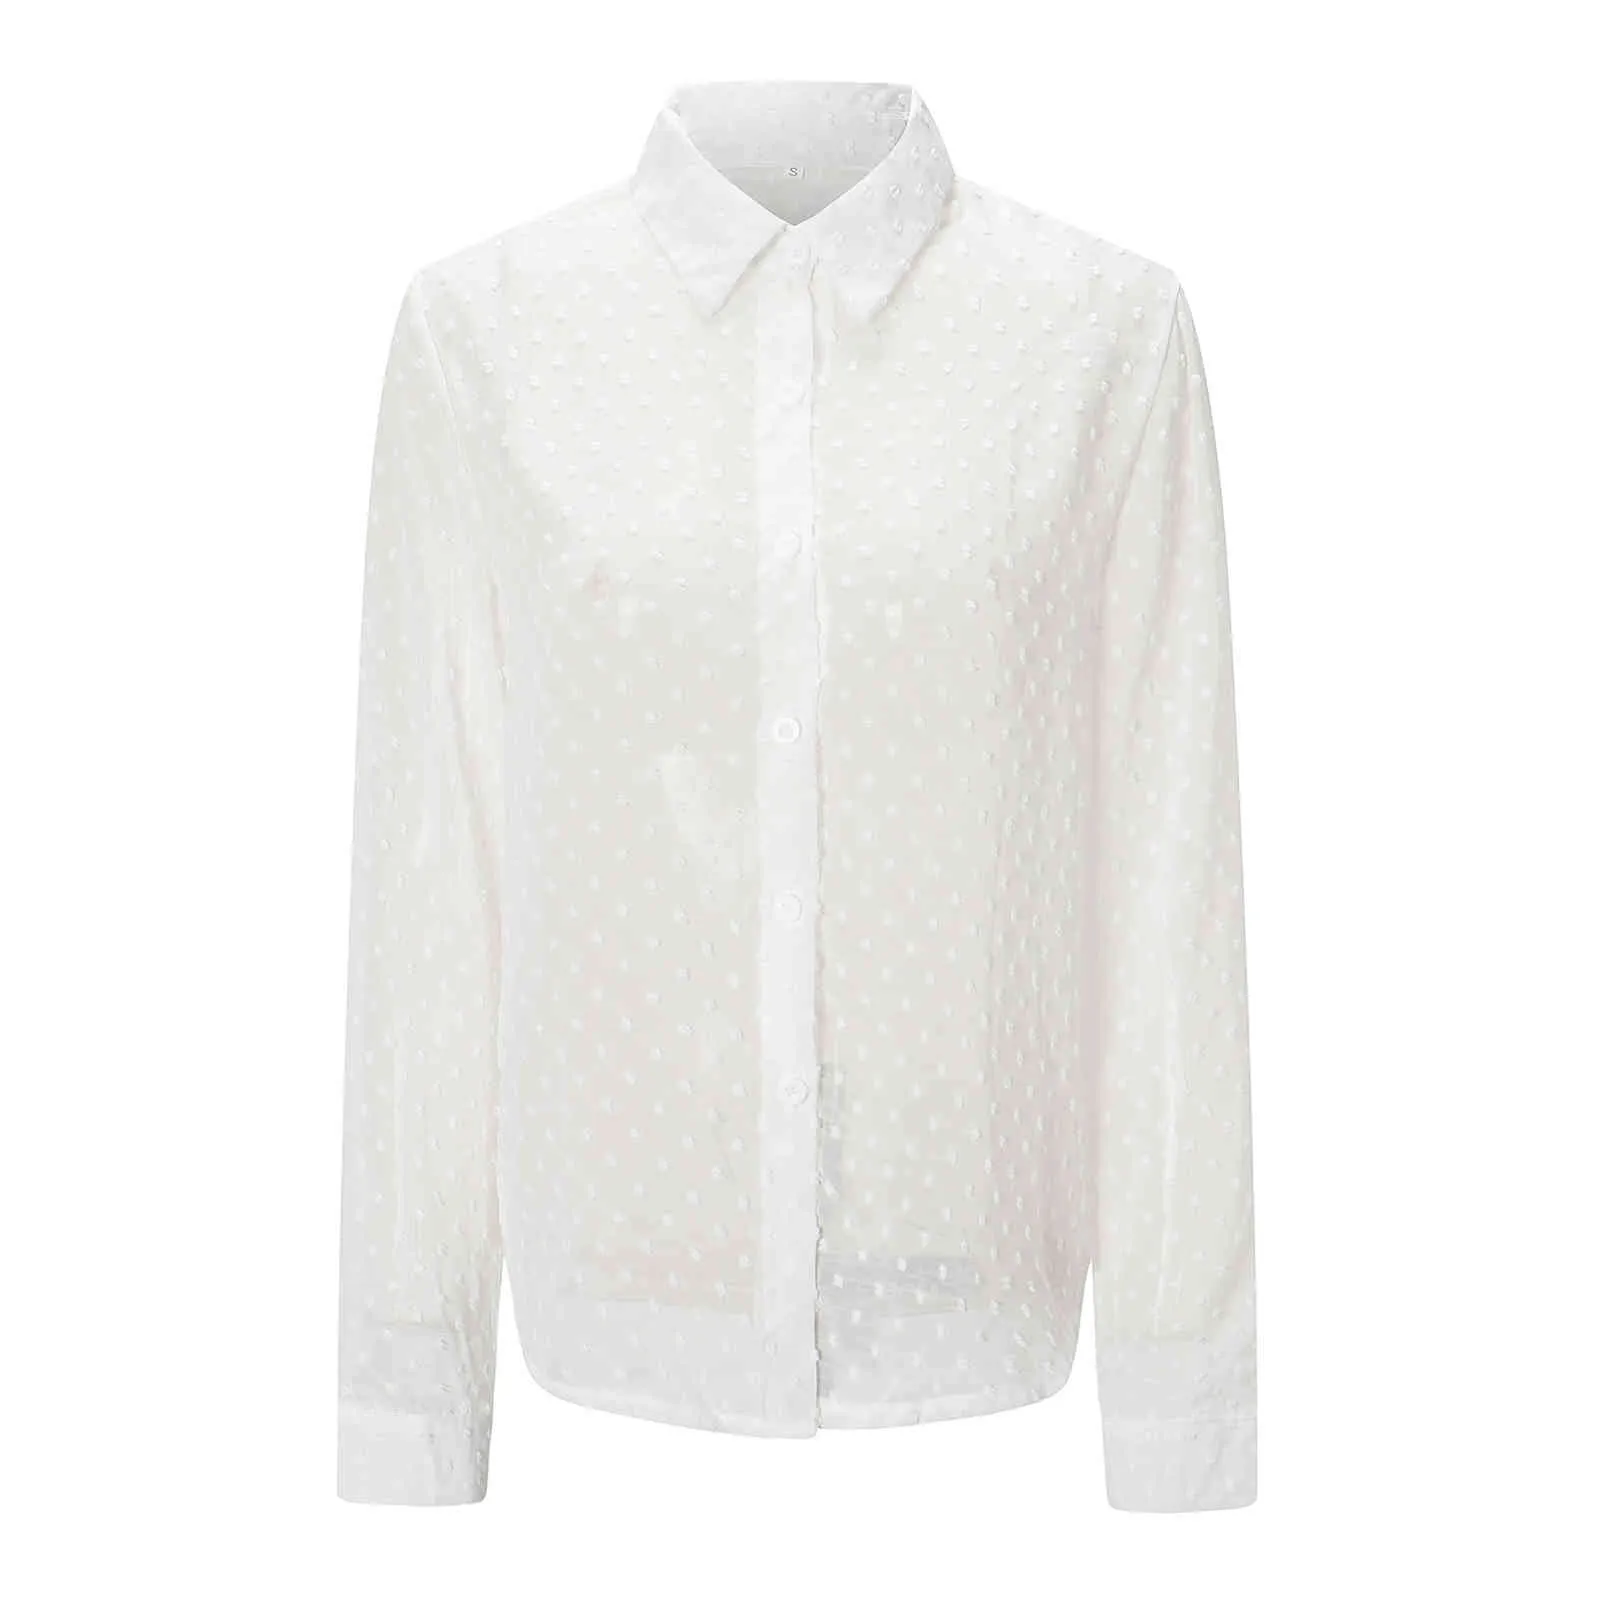 Tüll weiß gepunktete Bluse Shirt Damen Sommer Cover Up Strandbluse Streetwear Casaul Boho Shirt Tops weiblich 210415